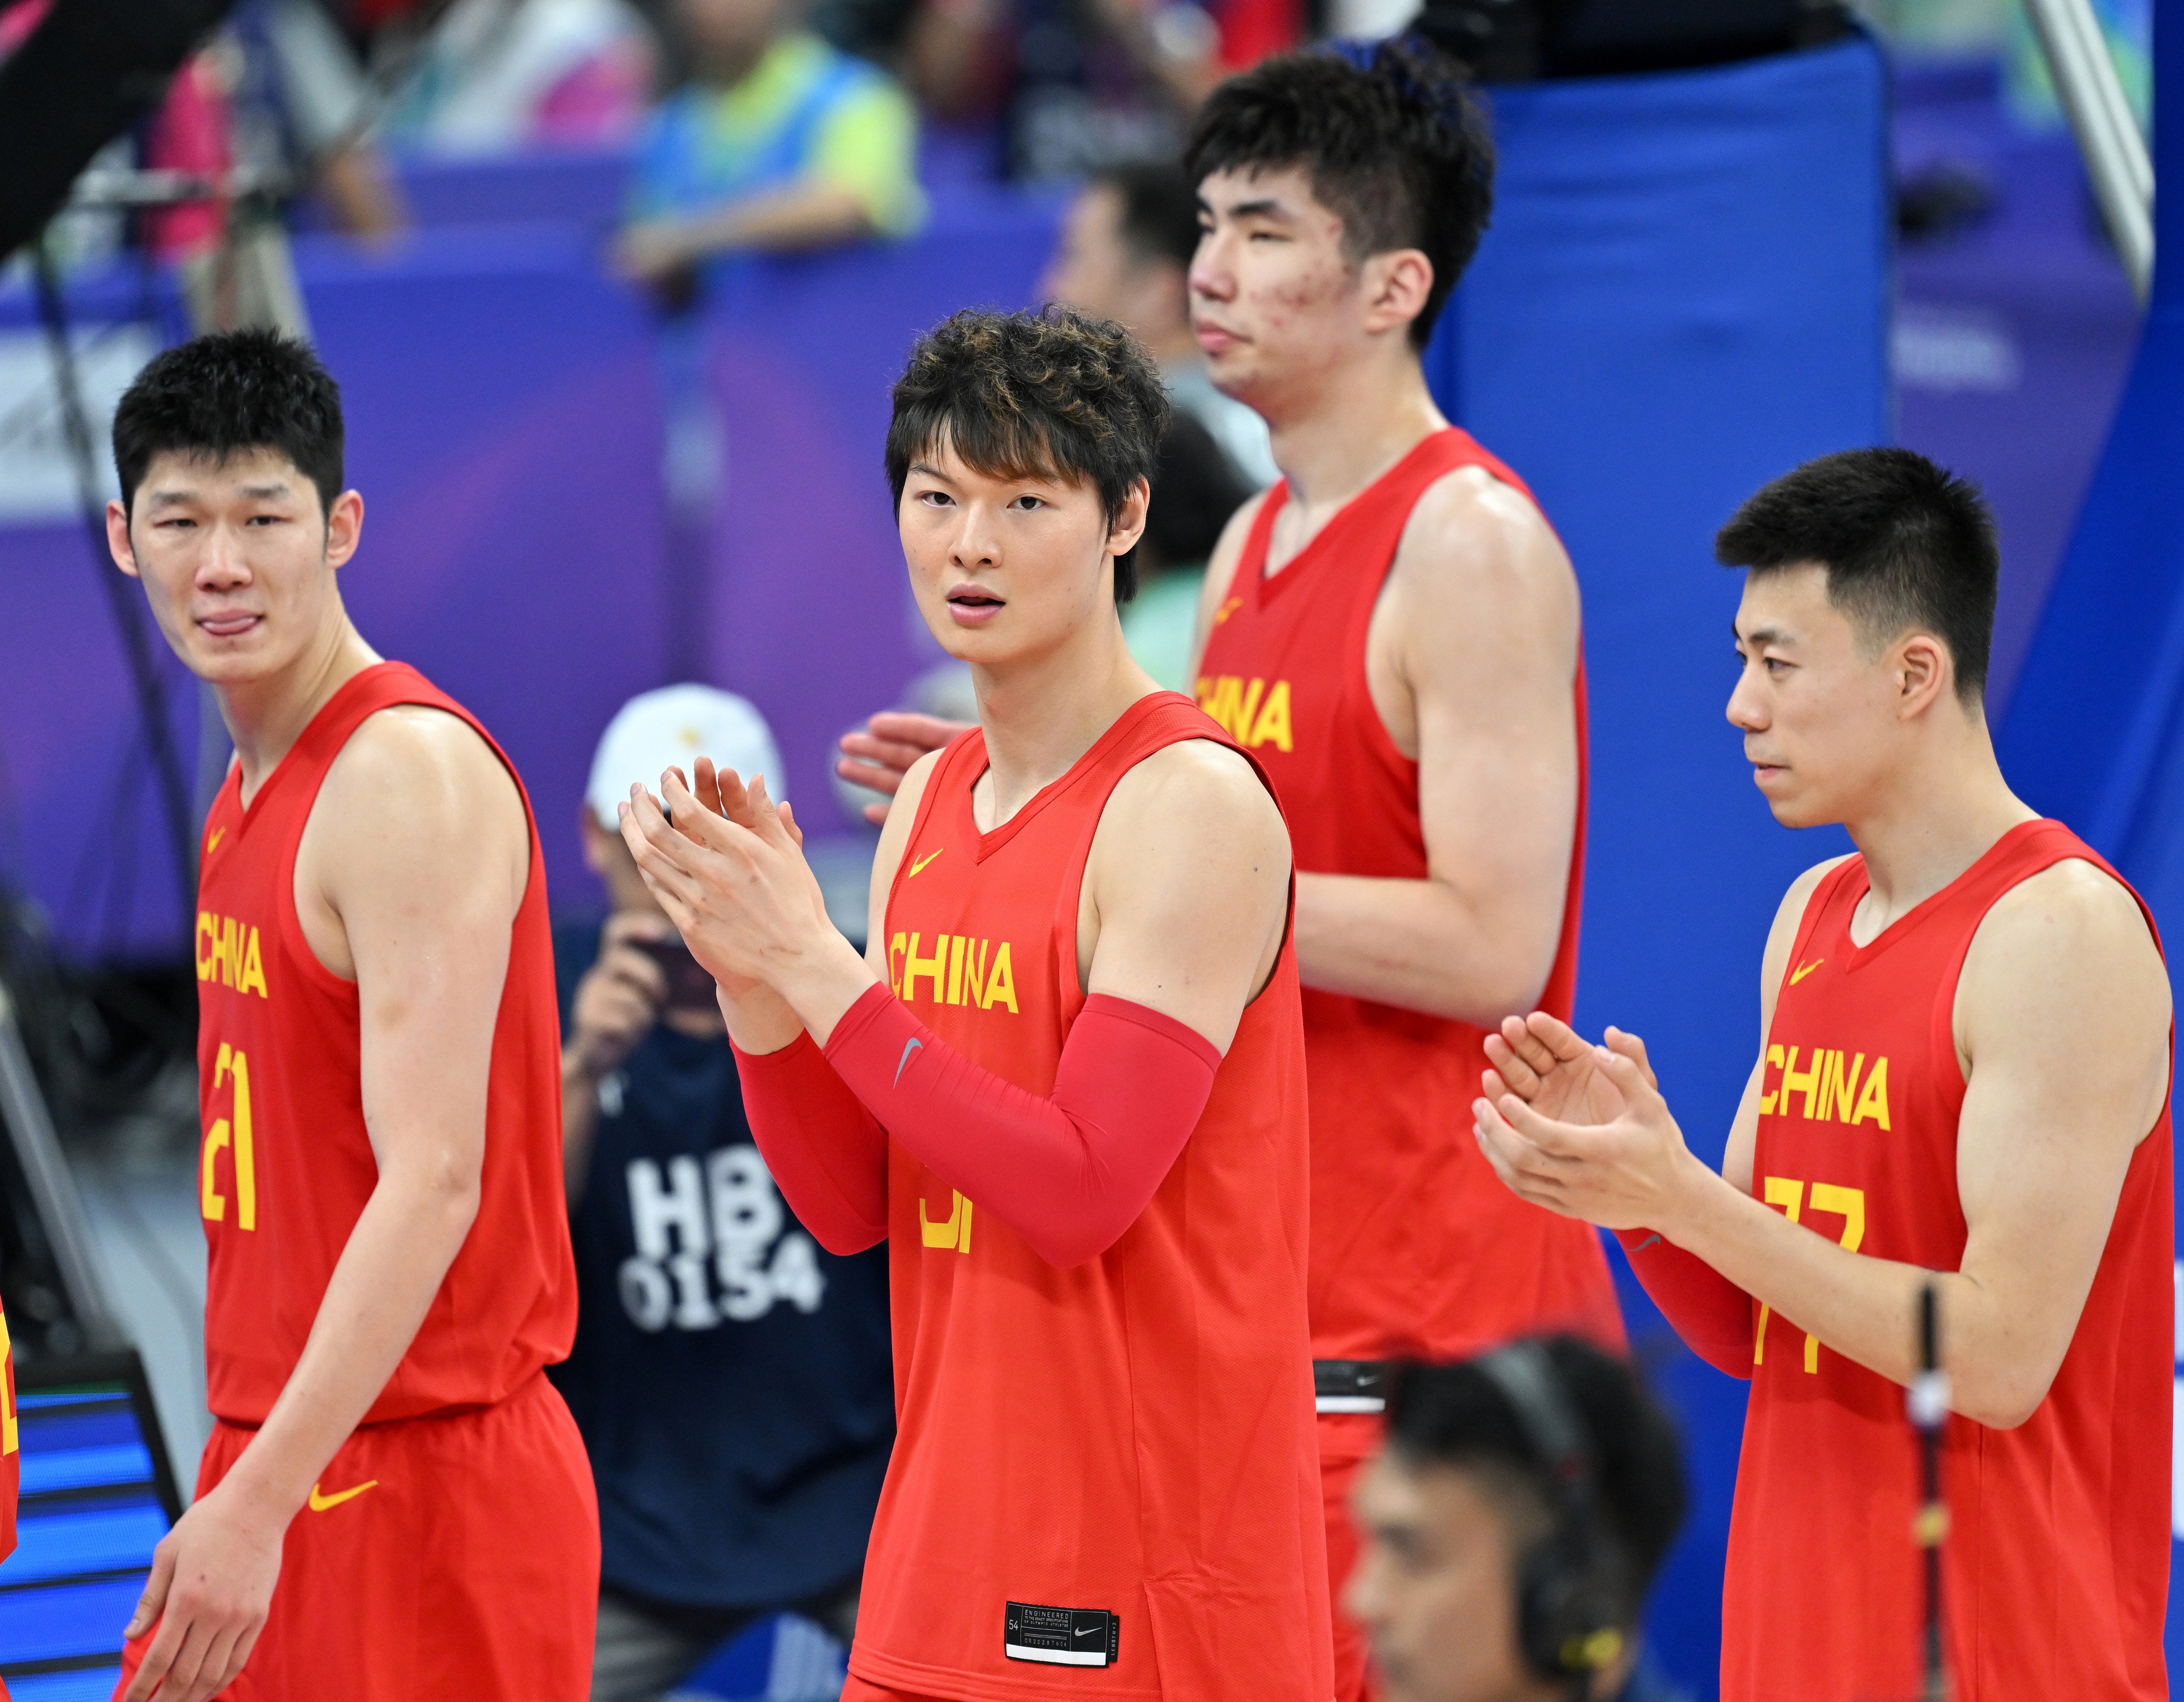 (231006) -- HANGZHOU, Oct. 6, 2023 (Xinhua) -- Players of China celebrate during the Men’s Bronze Medal Game of Basketball between China and Chinese Taipei at the 19th Asian Games in Hangzhou, east China’s Zhejiang Province, Oct. 6, 2023. (Xinhua/Zhan Yan)